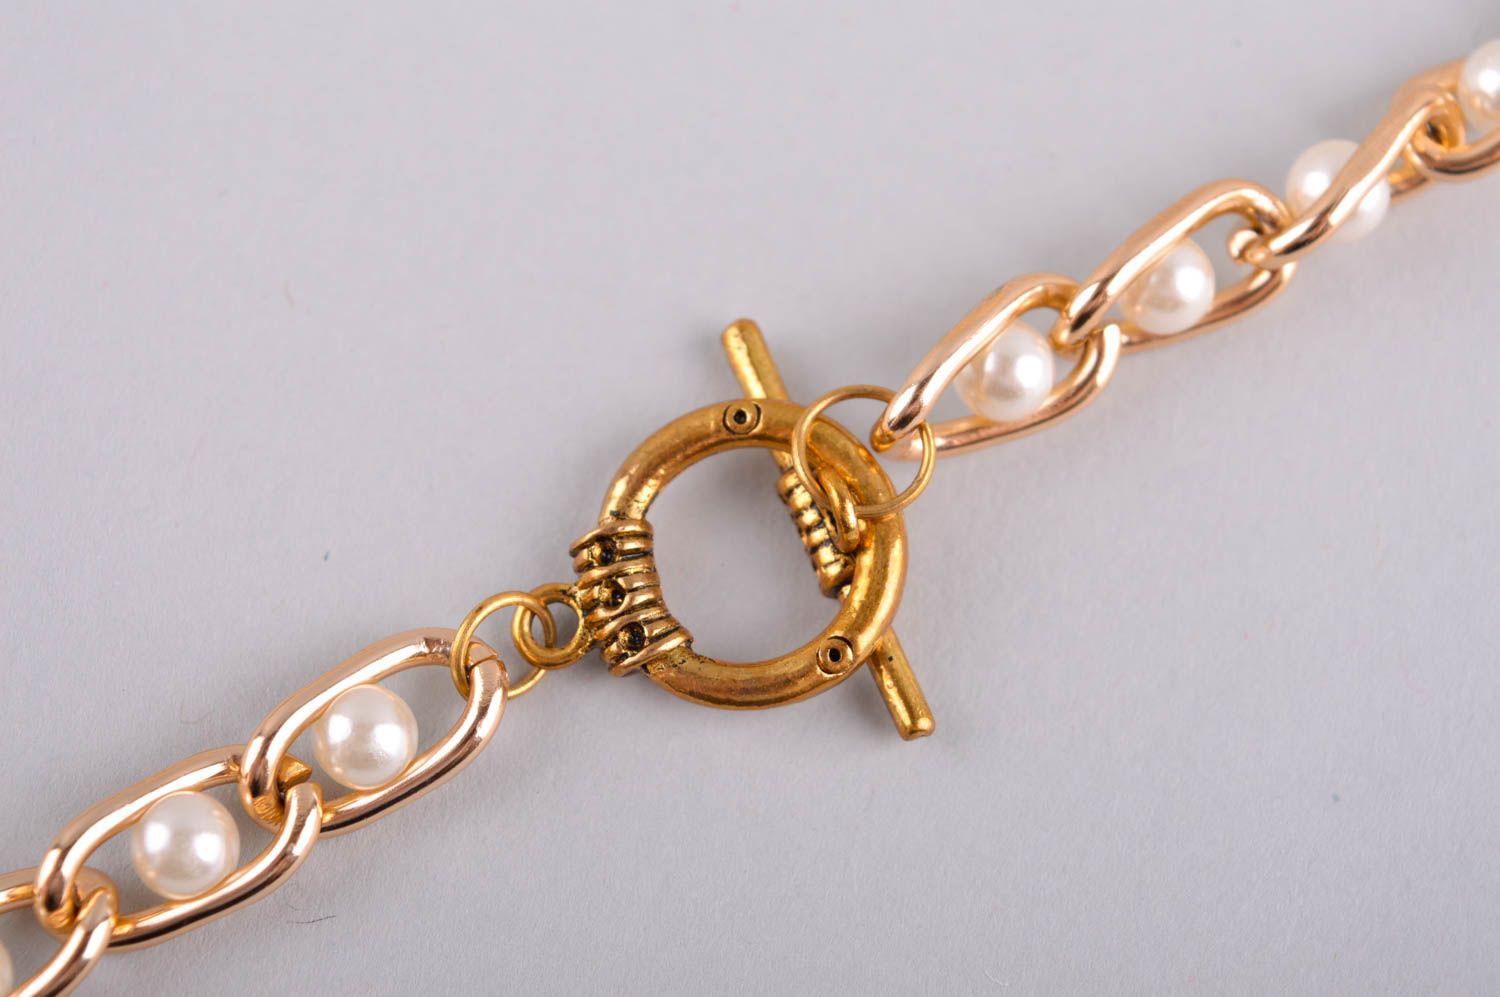 Handmade necklace designer accessory unusual gift beautiful beads jewelry photo 4